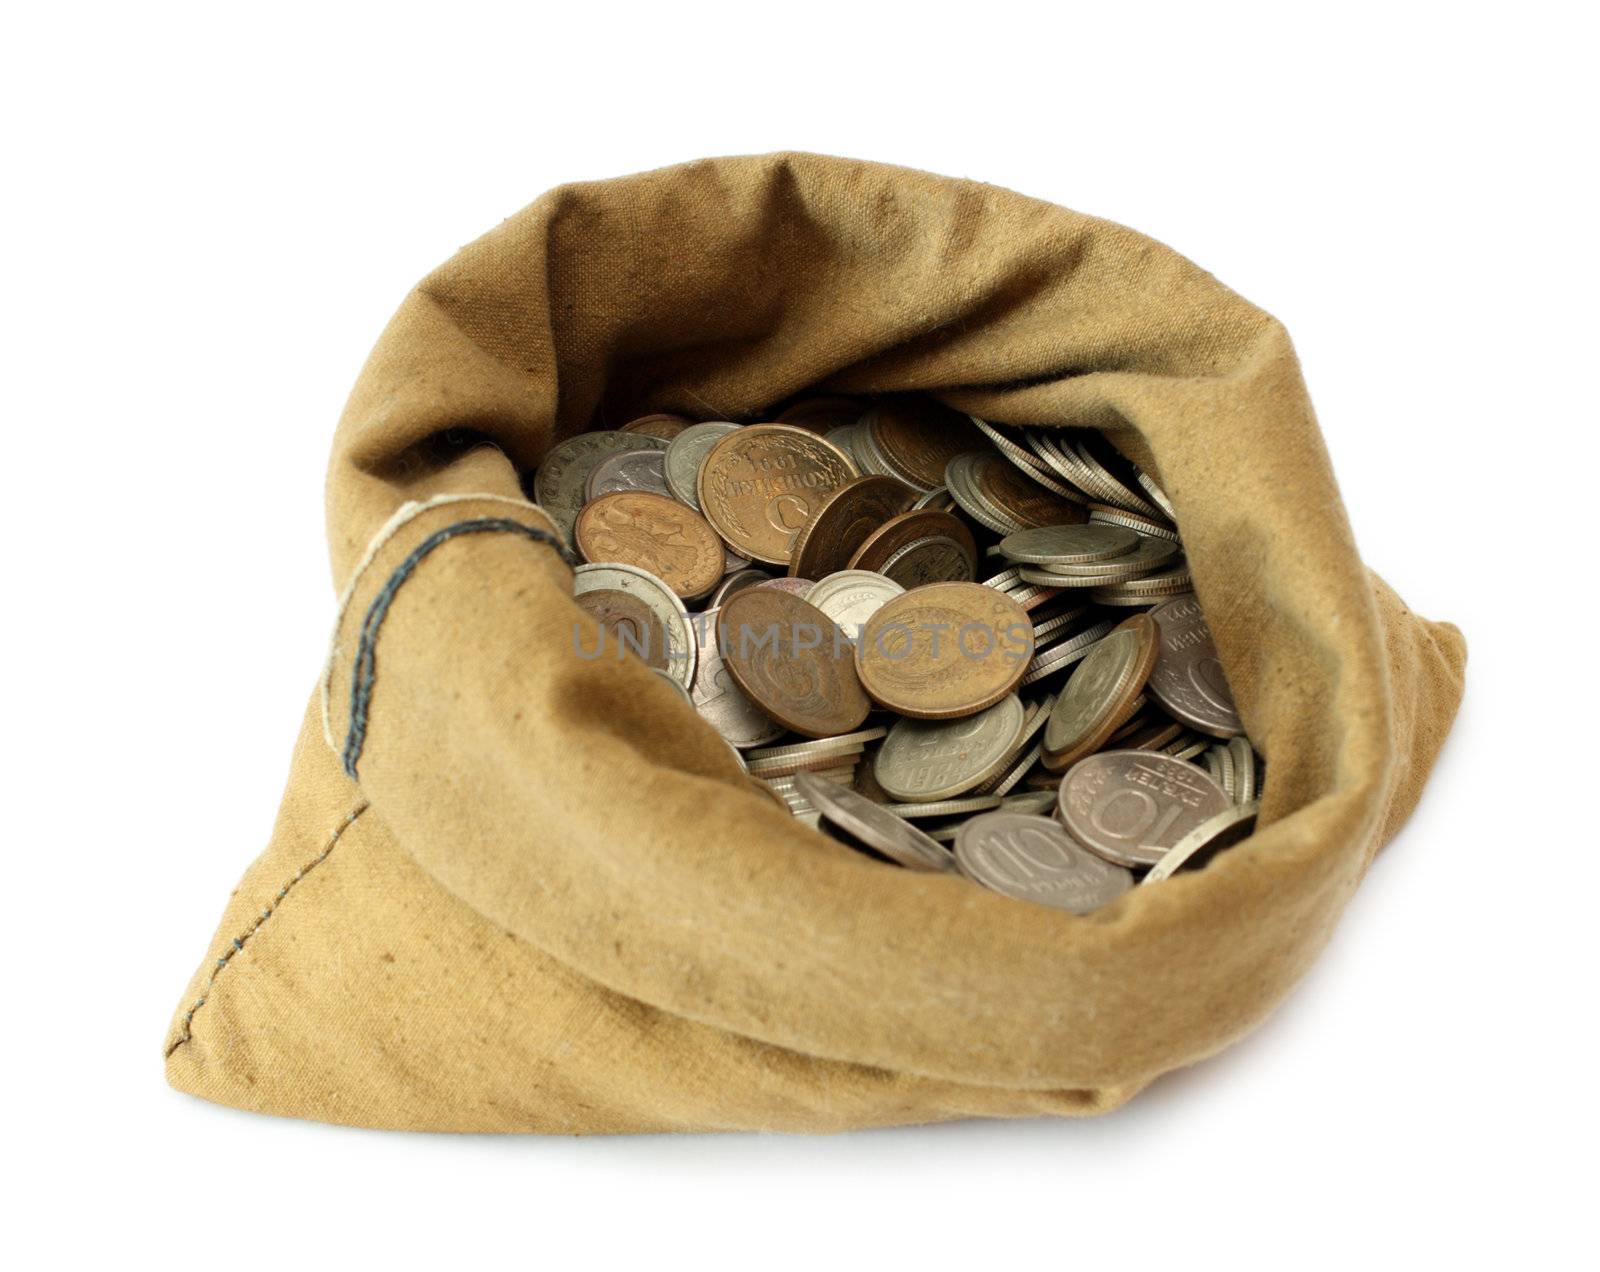 money coins in bag by Mikko